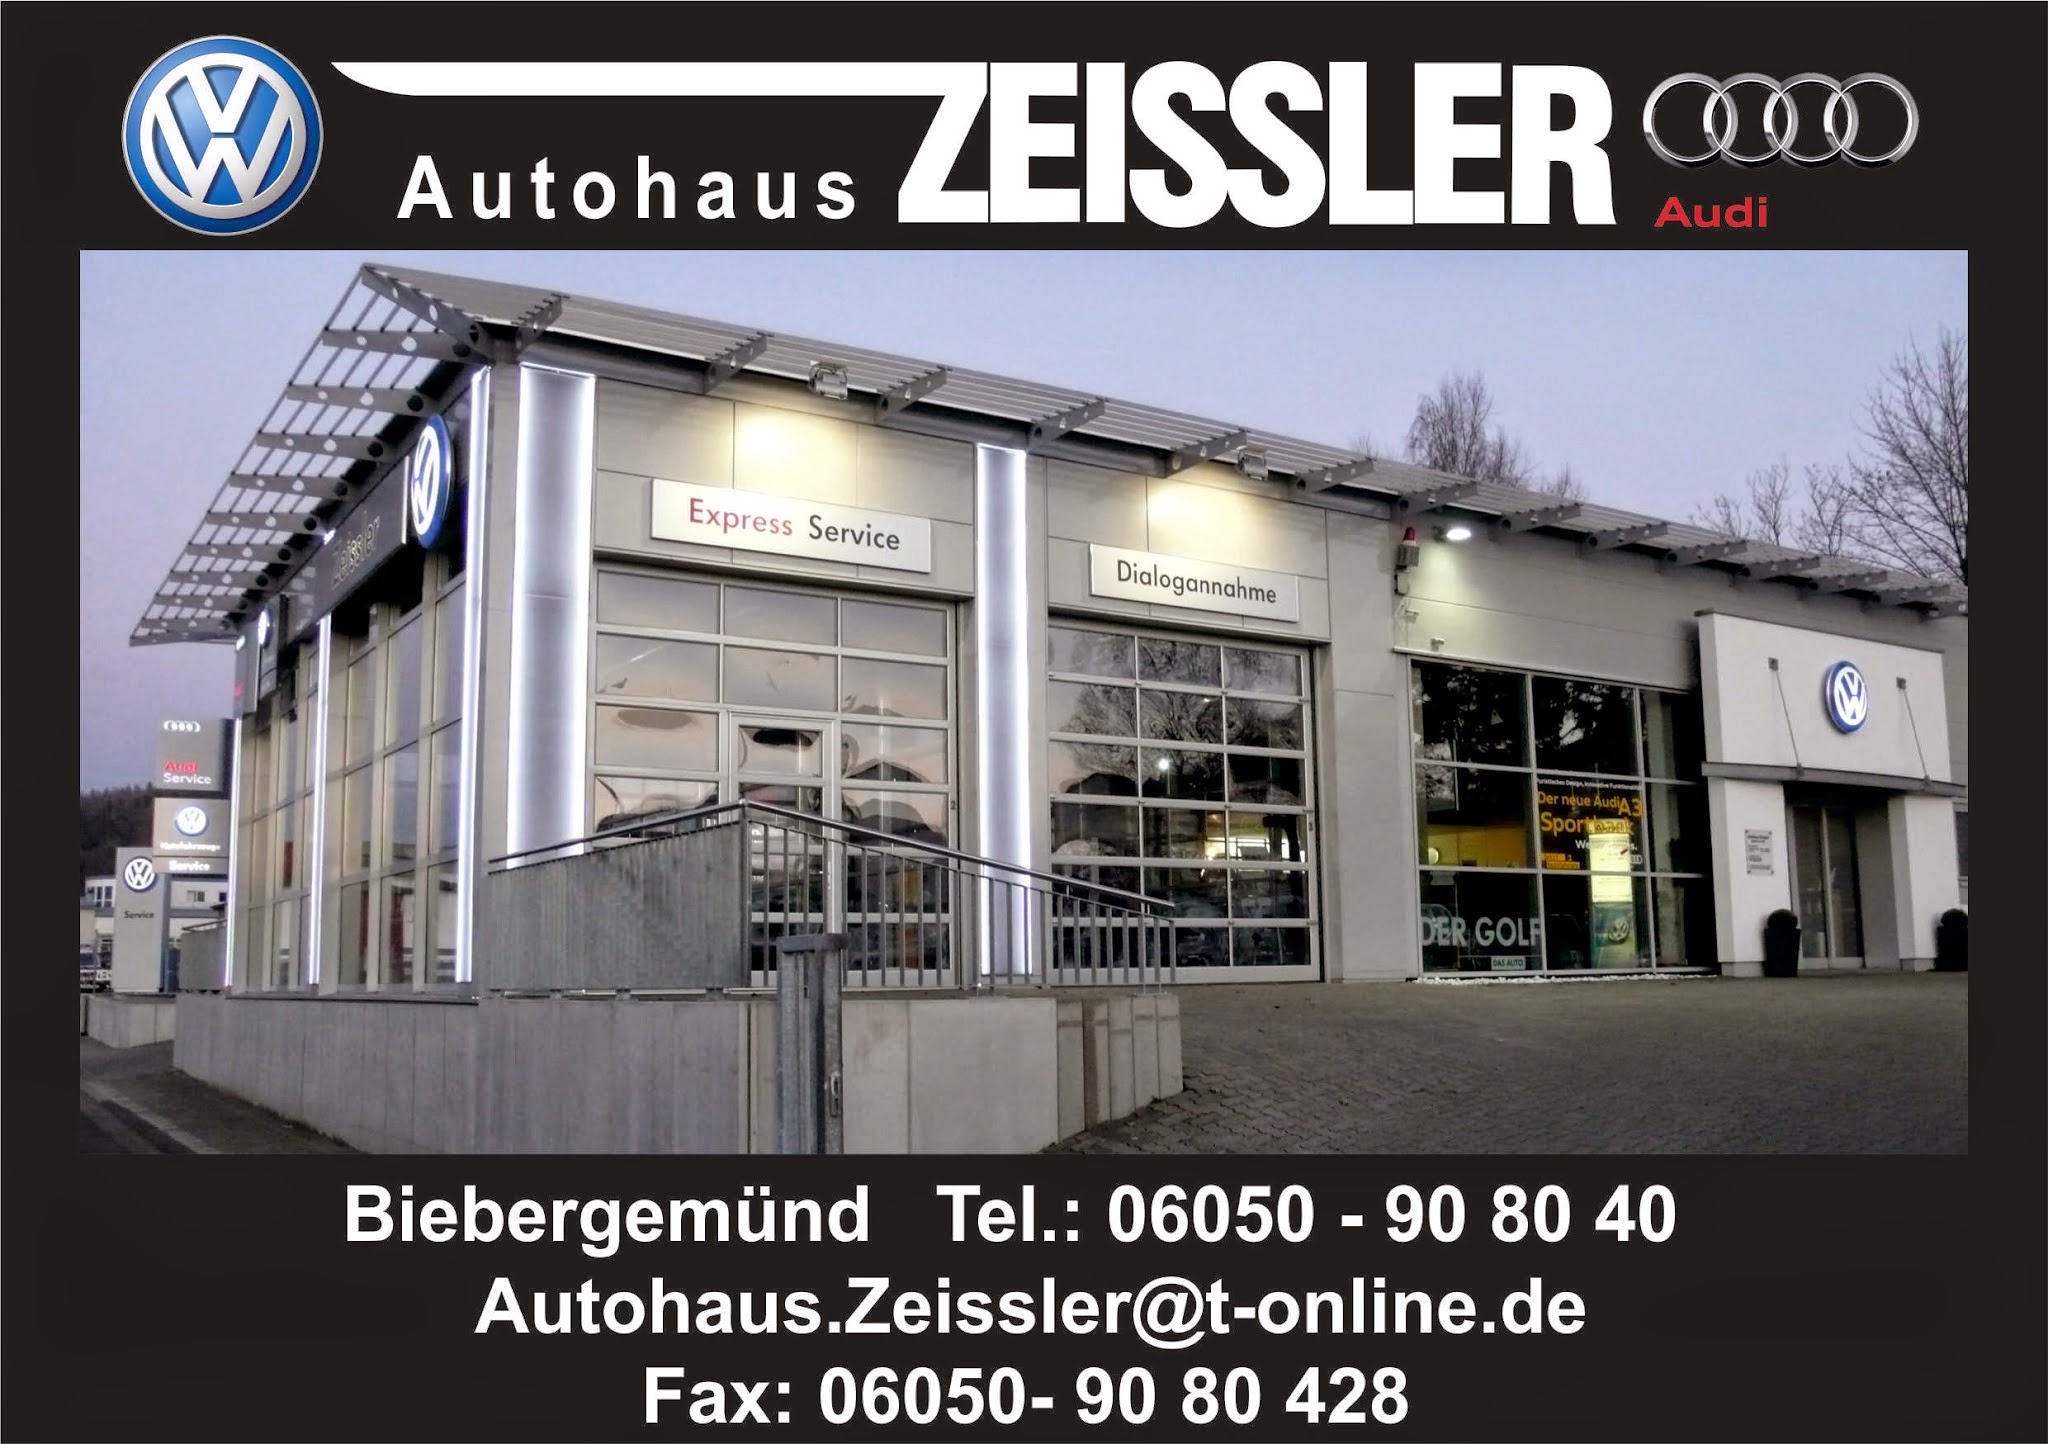 Autohaus Zeissler Gmbh & Co. Kg